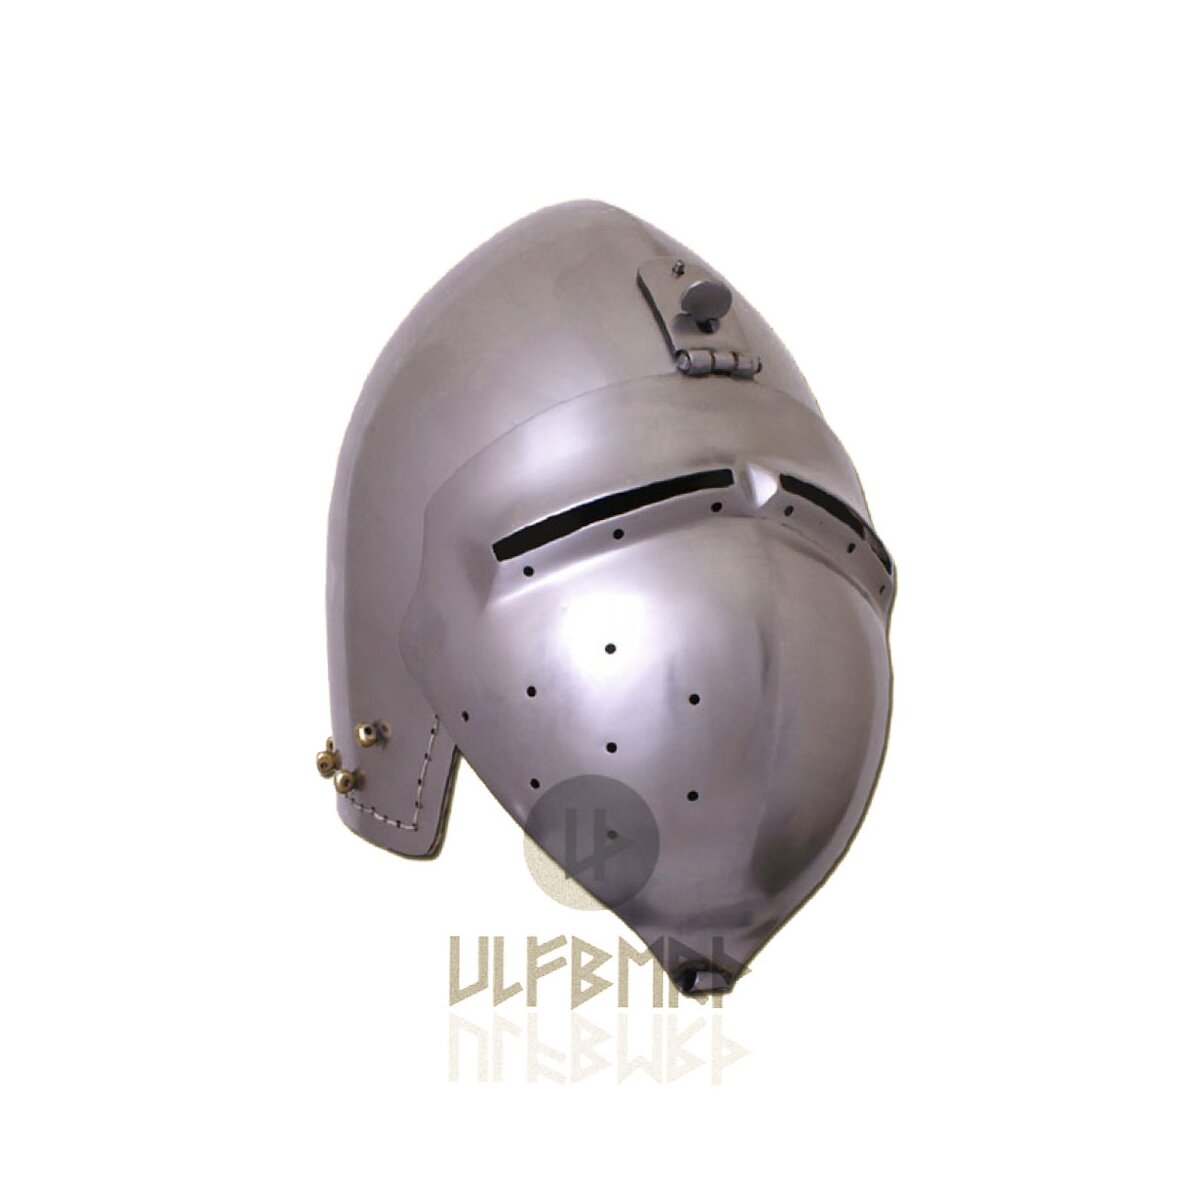 German pelvic hood with visor, 2 mm steel - suitable for...